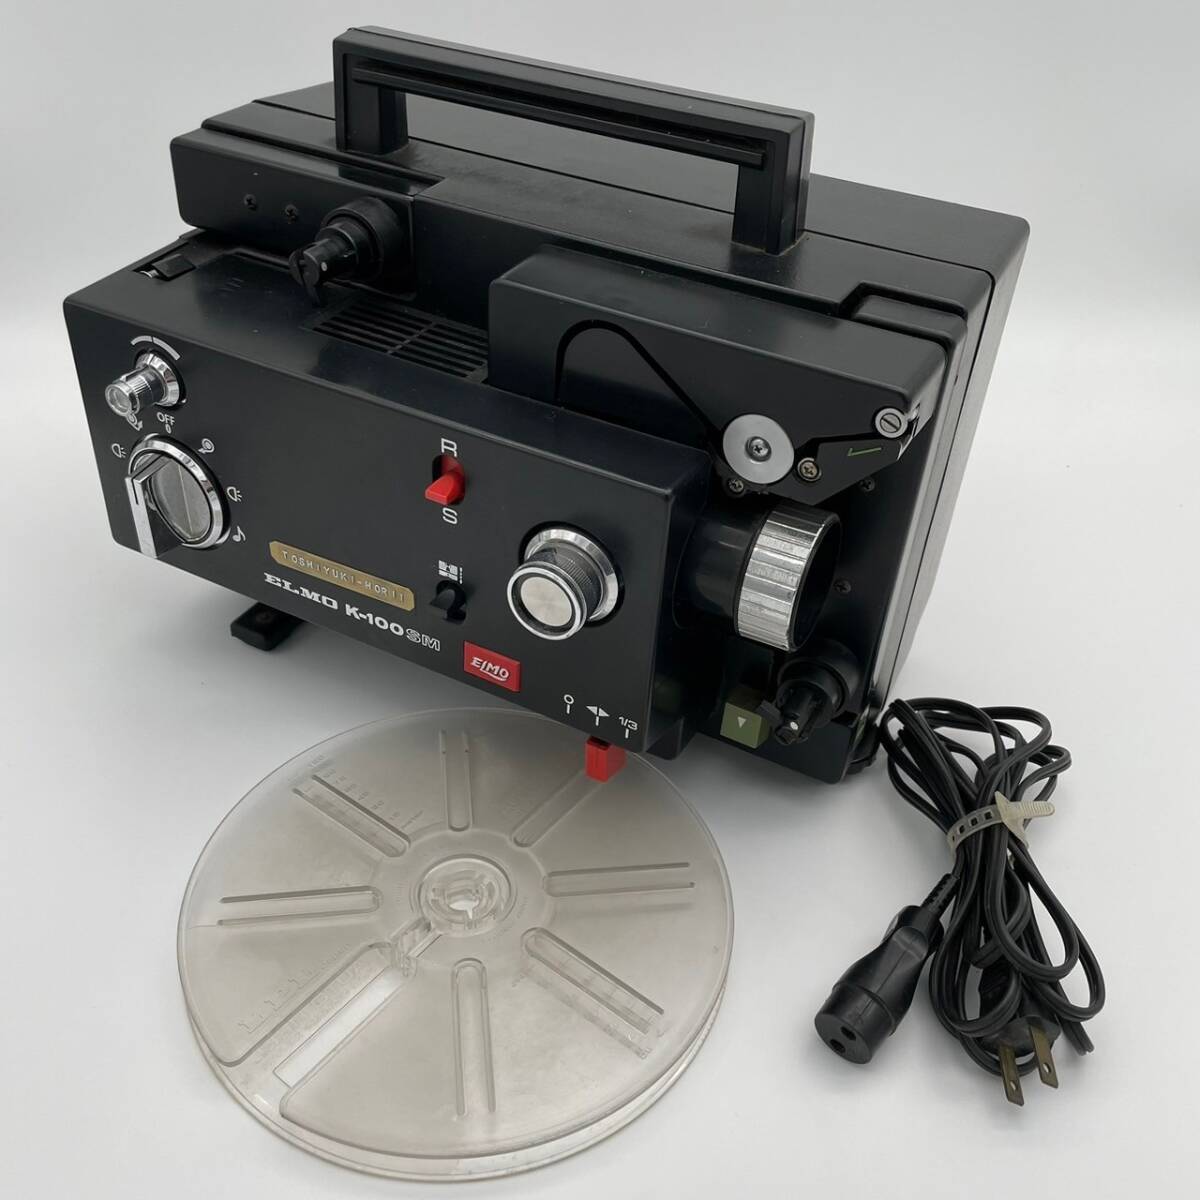 EY0328-4.. machine ELMO Elmo K-100SM 8mm projector electrification verification settled Showa Retro collection present condition goods 100 size 